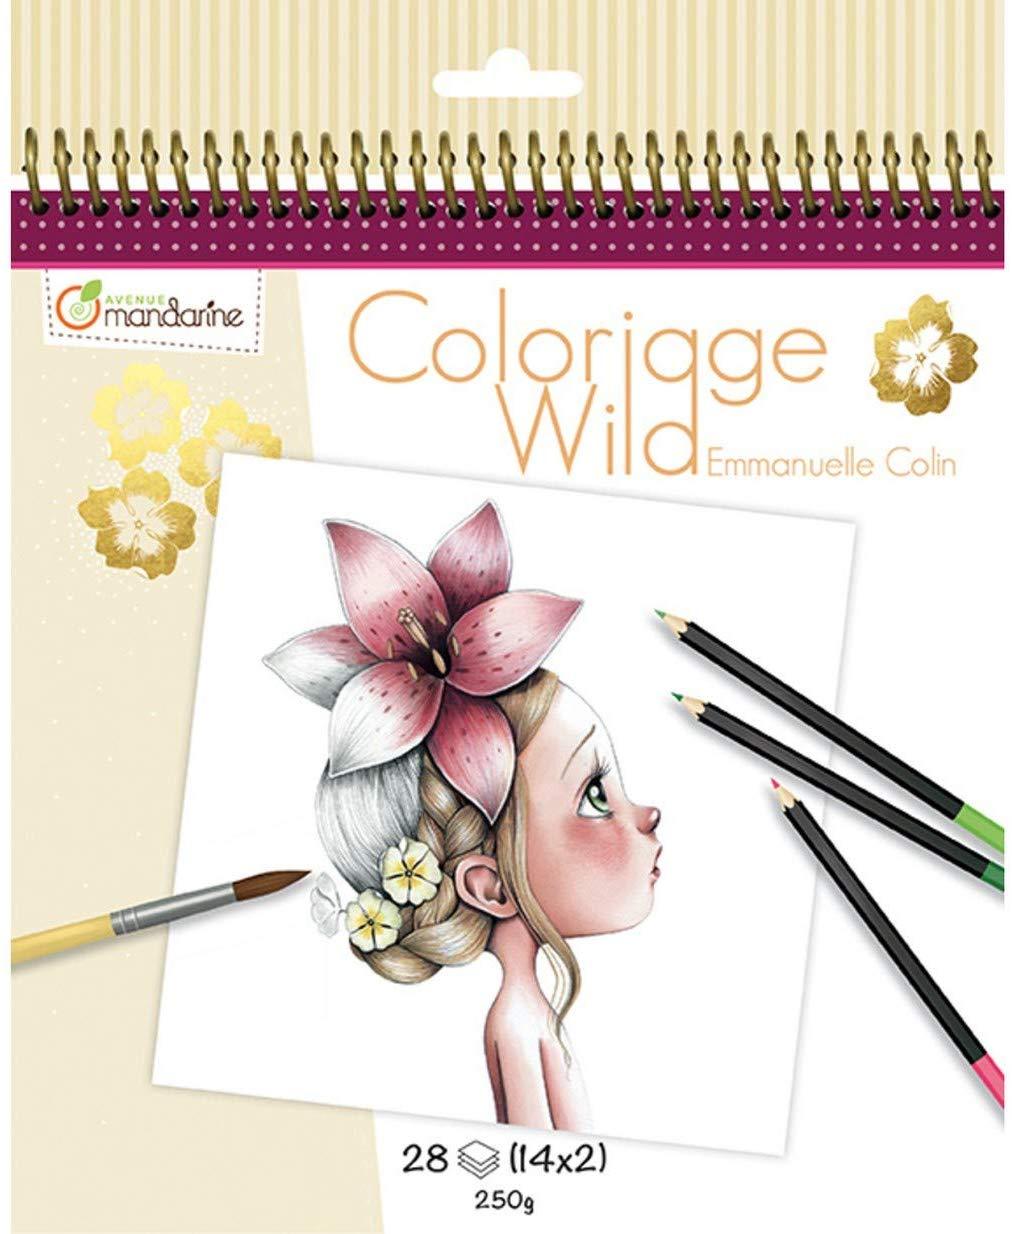 Avenue Mandarine Coloriage Wild Emmanuelle Colin - Me Books Asia Store